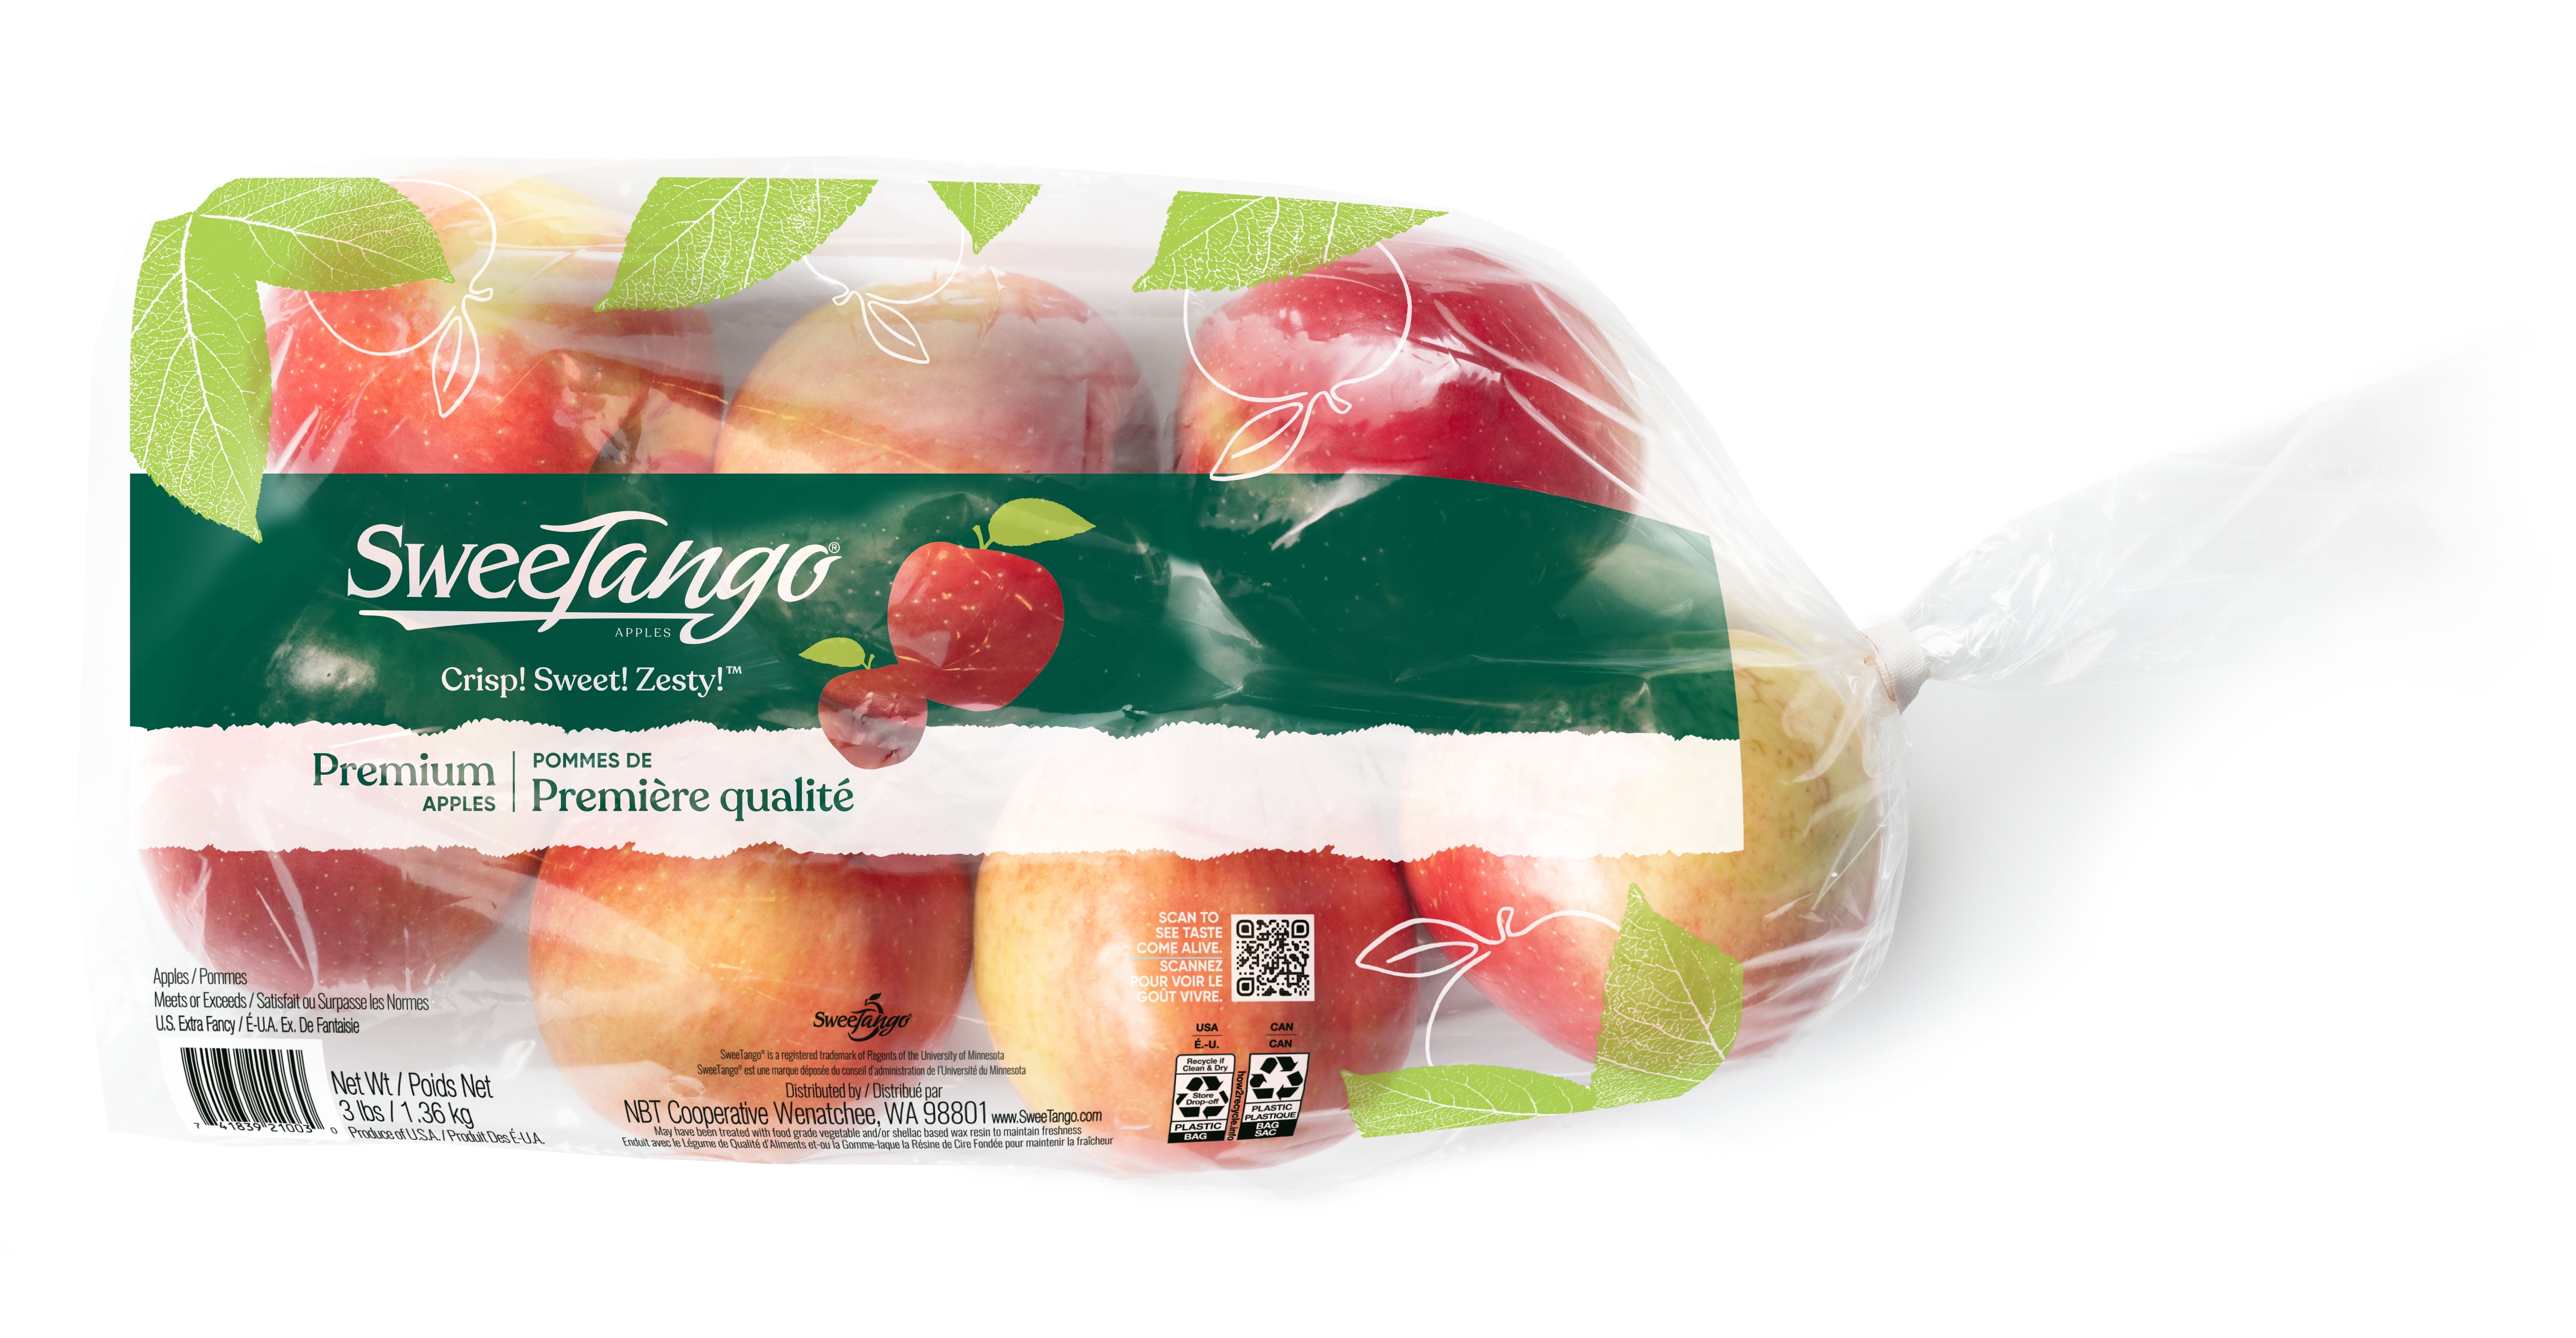 Organic Large Cosmic Crisp Apples, Large/ 1 Count - Kroger